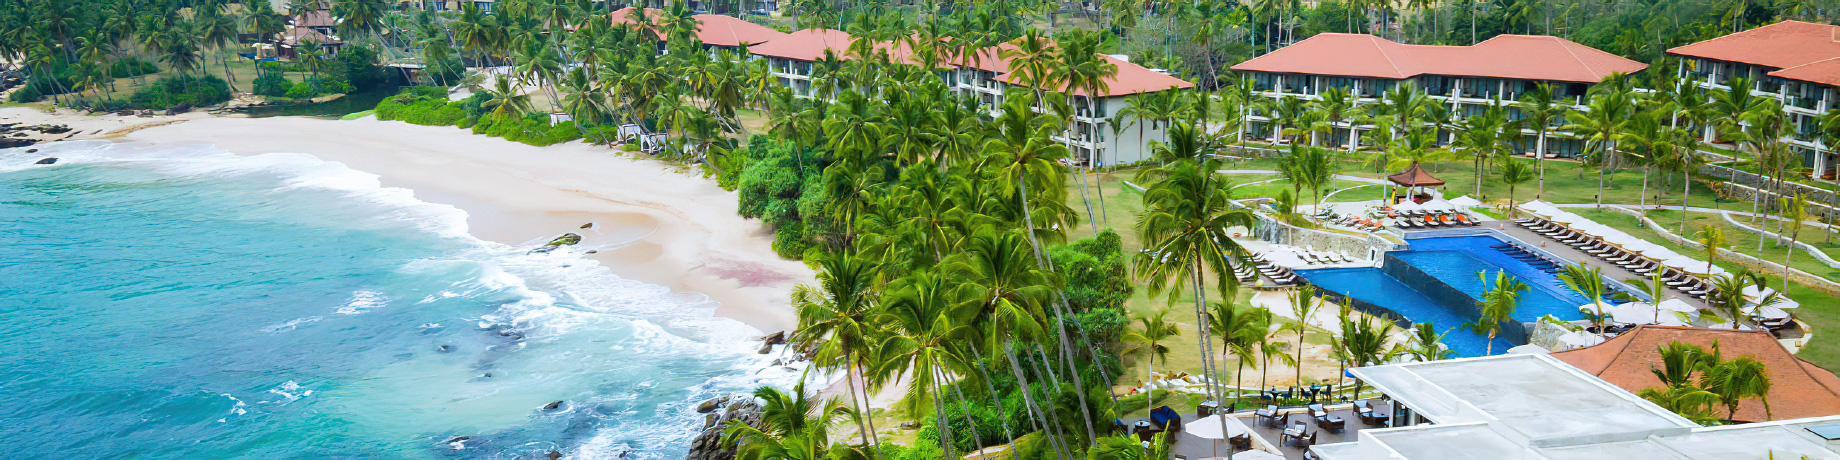 Anantara Peace Haven Tangalle Resort – Sri Lanka – Beach Aerial View